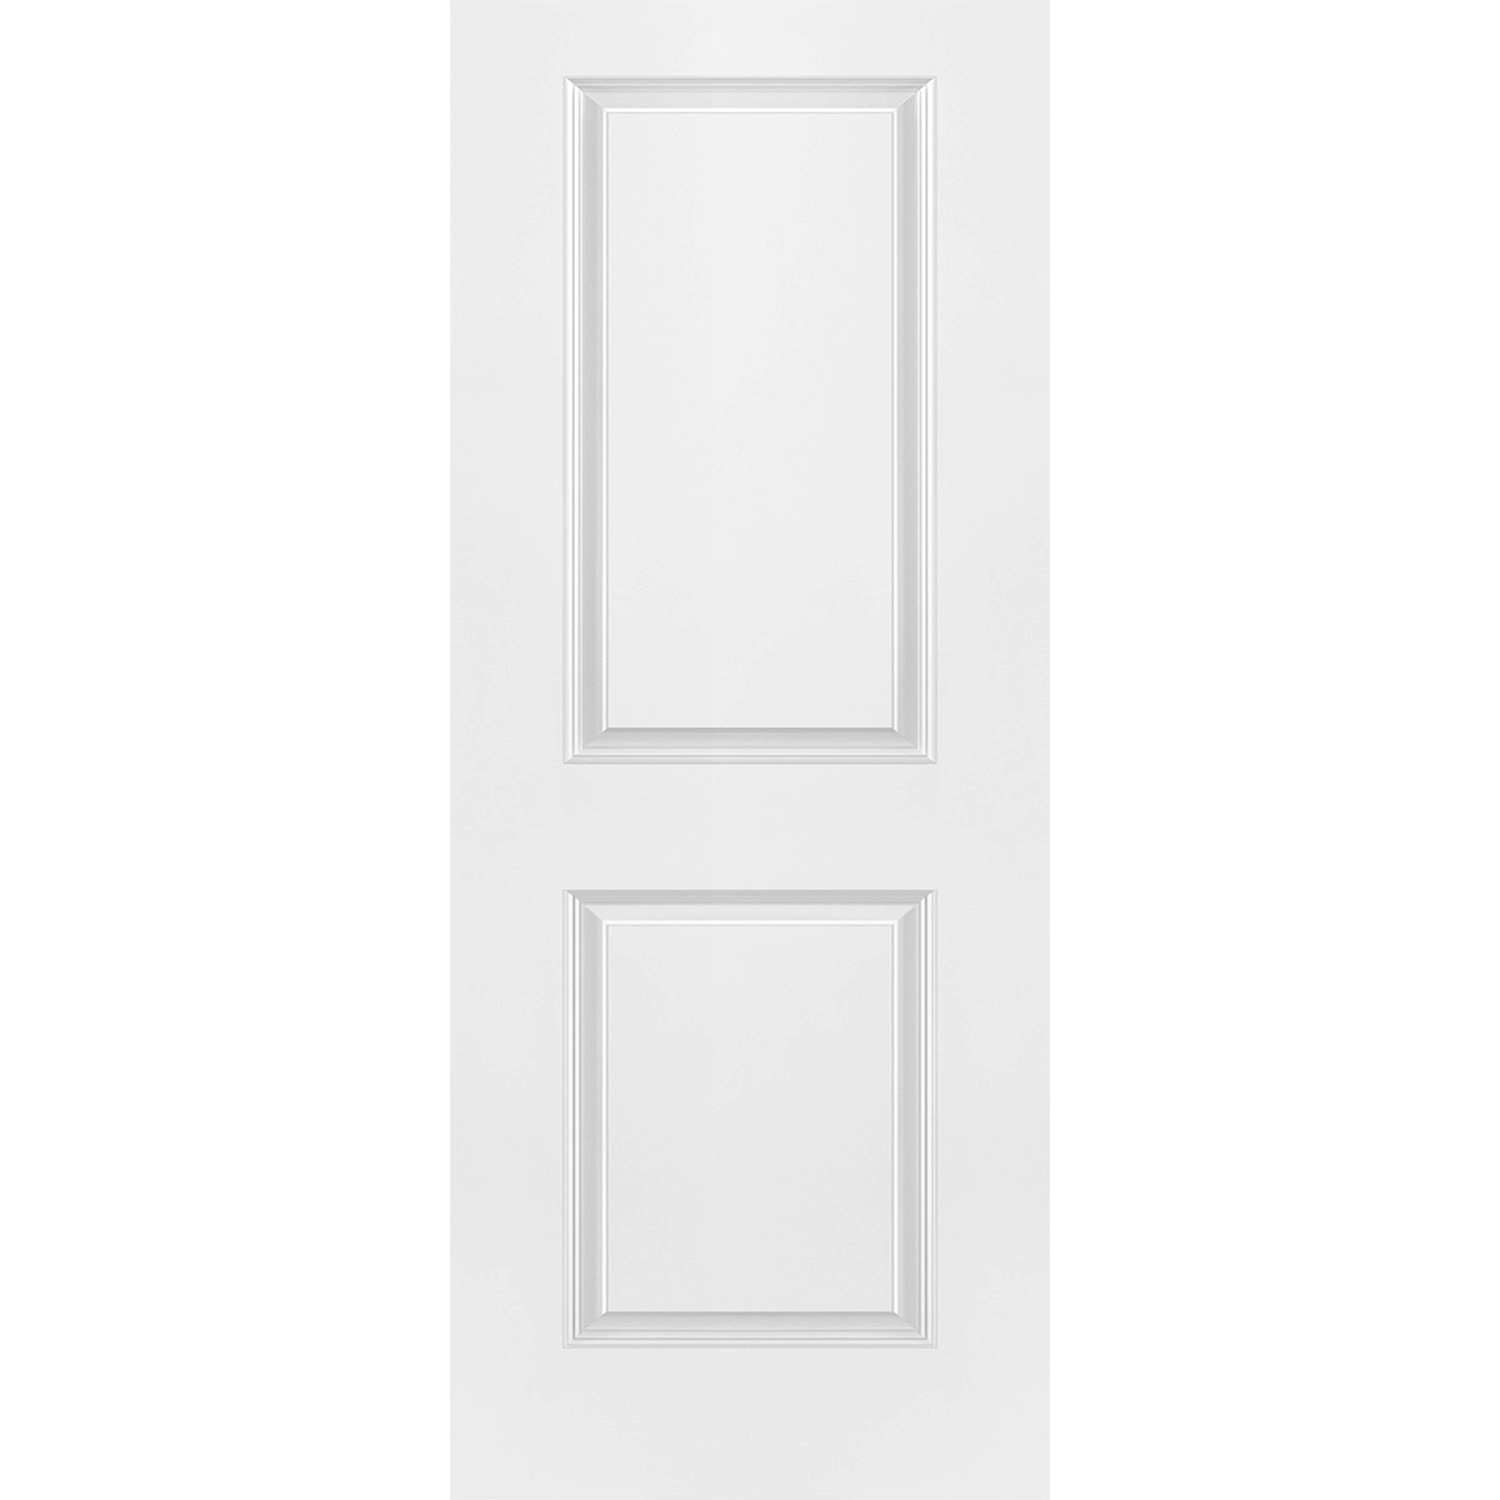 2 Panel 80 x 32 x 1-3/8 Smooth Hollow Door Raised